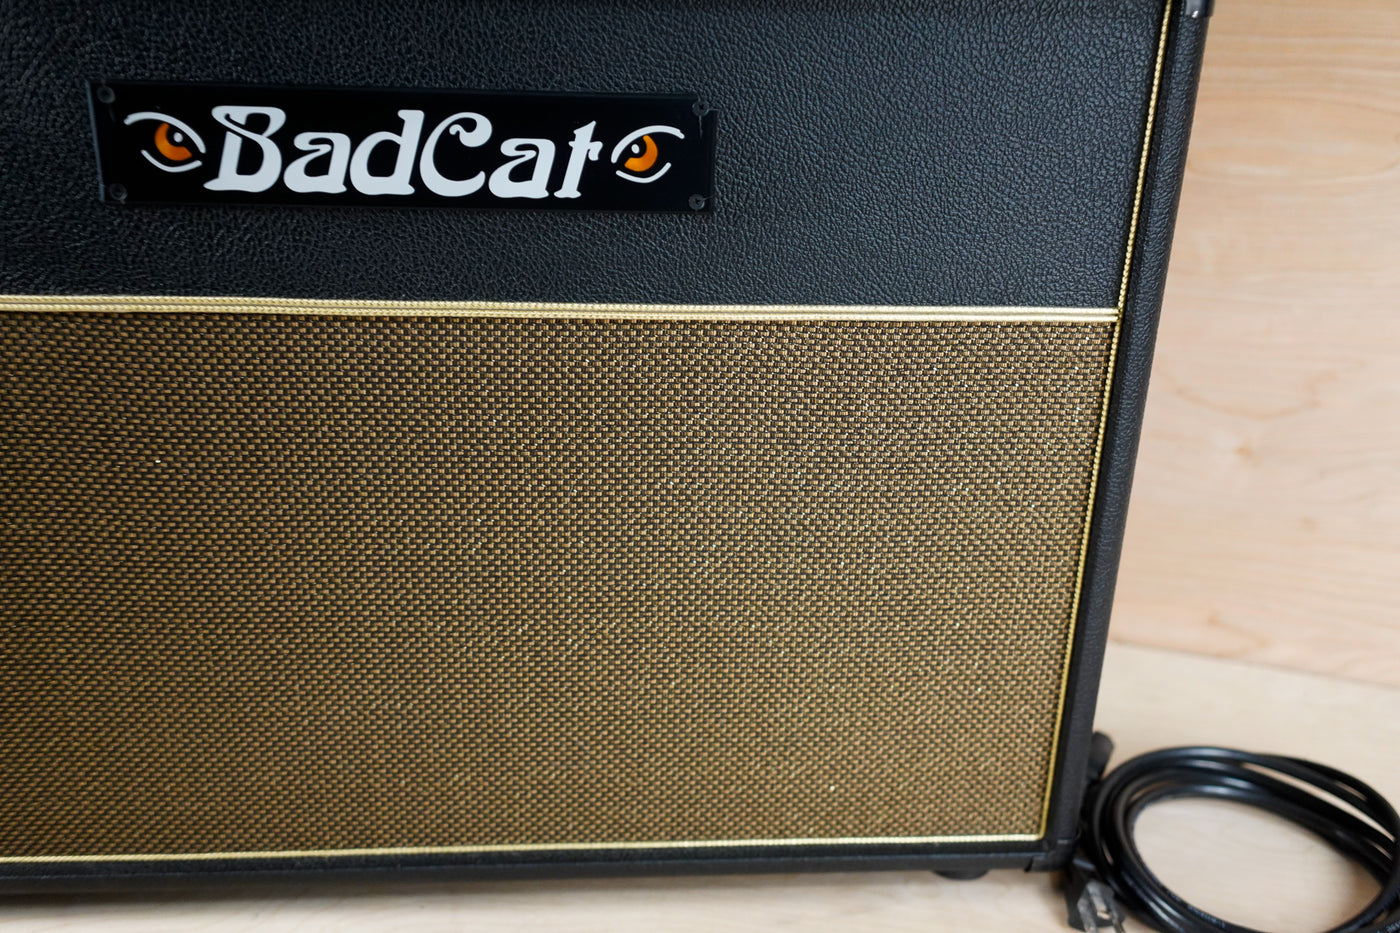 Bad Cat Hot Cat 30R Had Wired Legacy Series 30-Watt Guitar Amp Head & 2x12 Cab